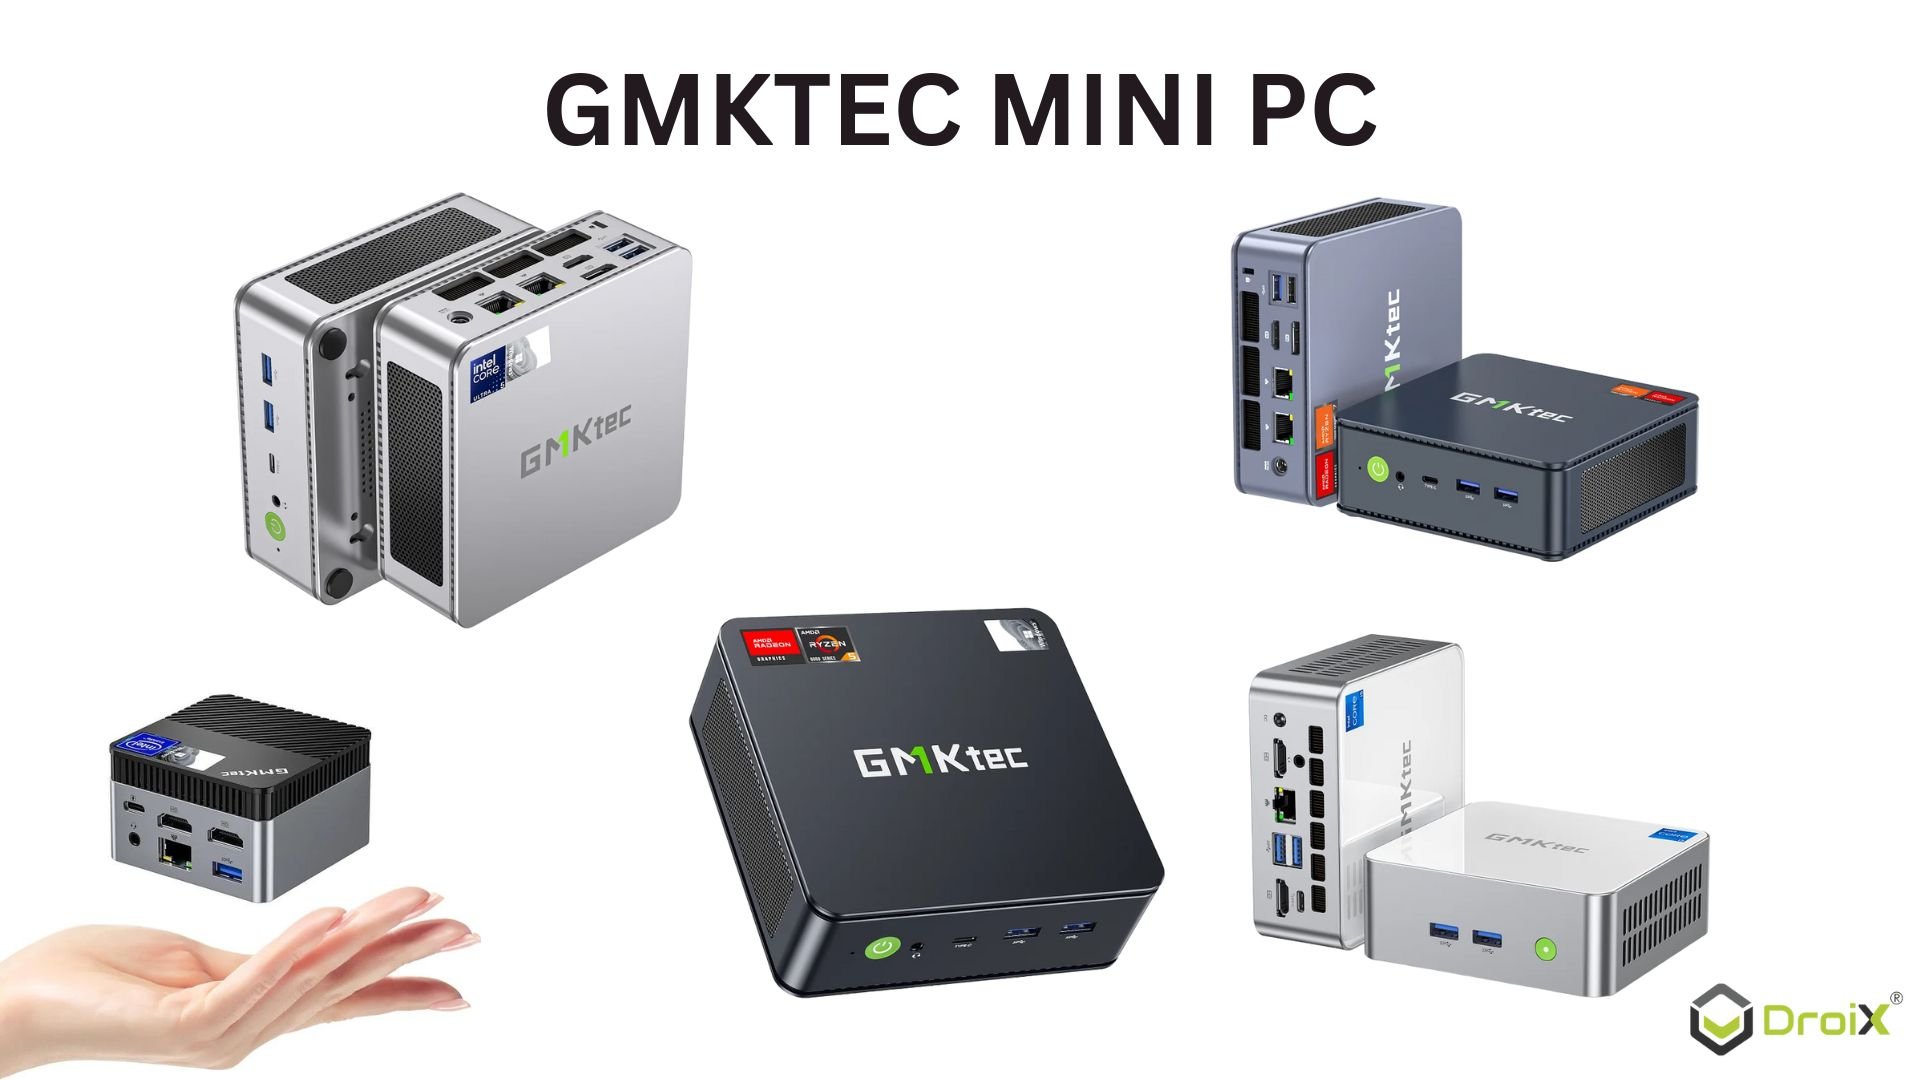 New range of GMKTec mini PCs now available